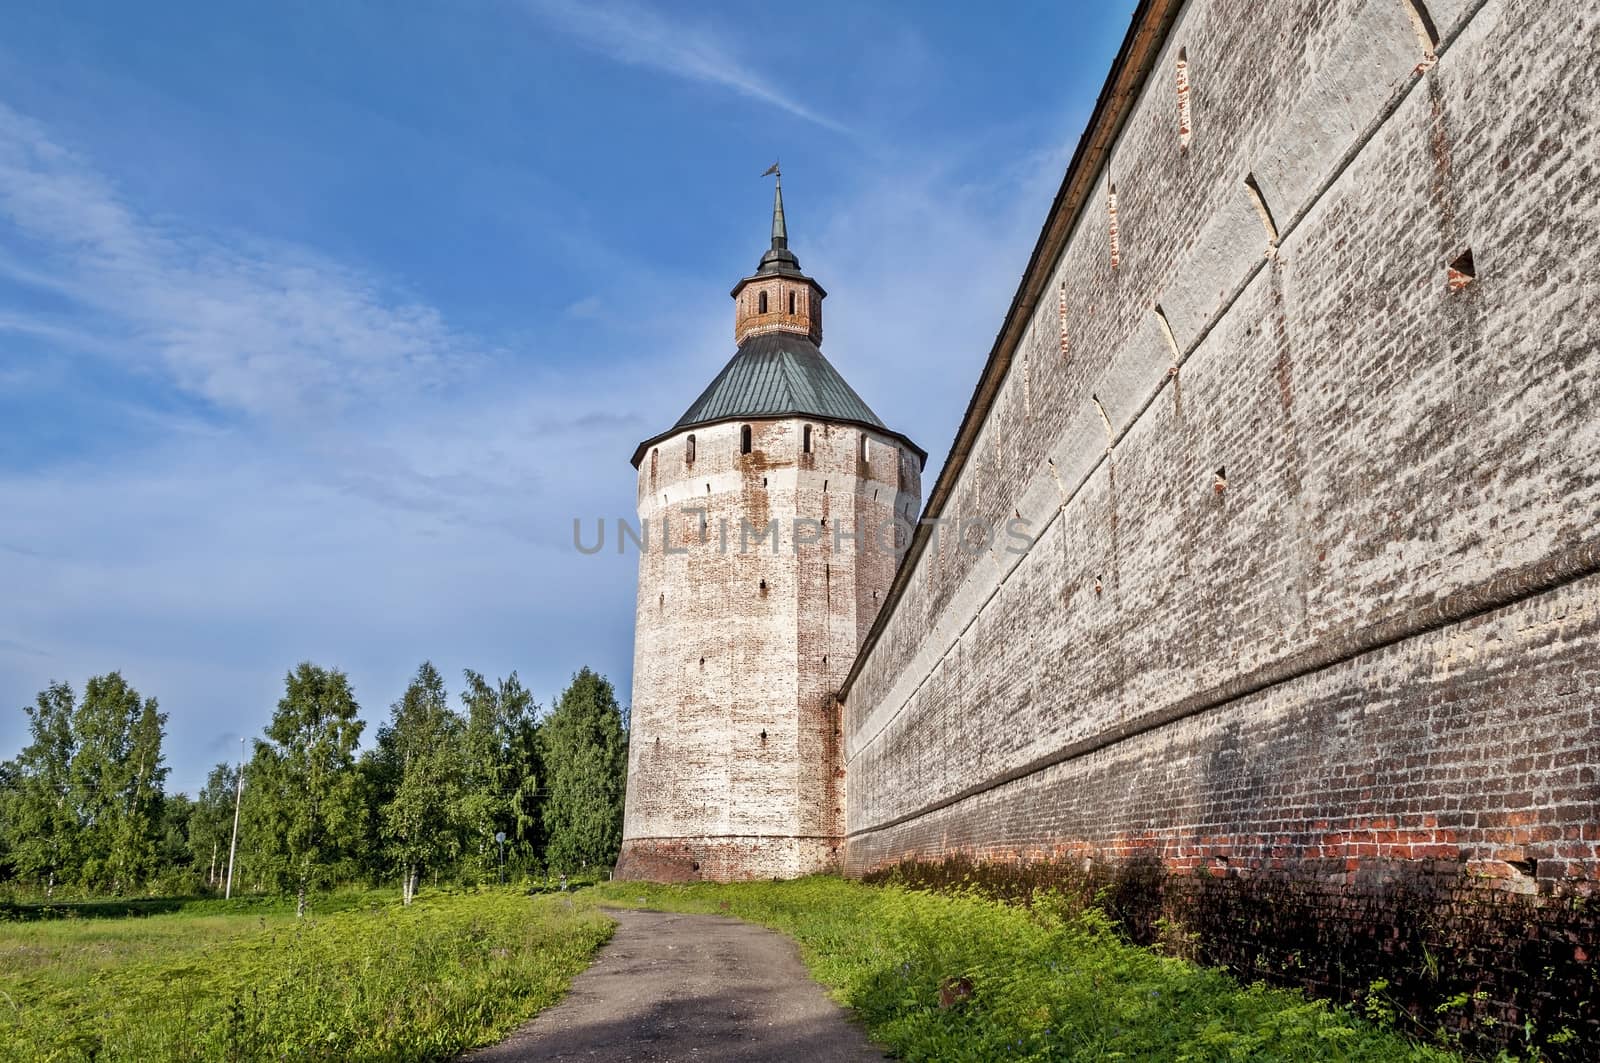 Ferapontov tower of Kirillo-Belozersky monastery, Russia by wander